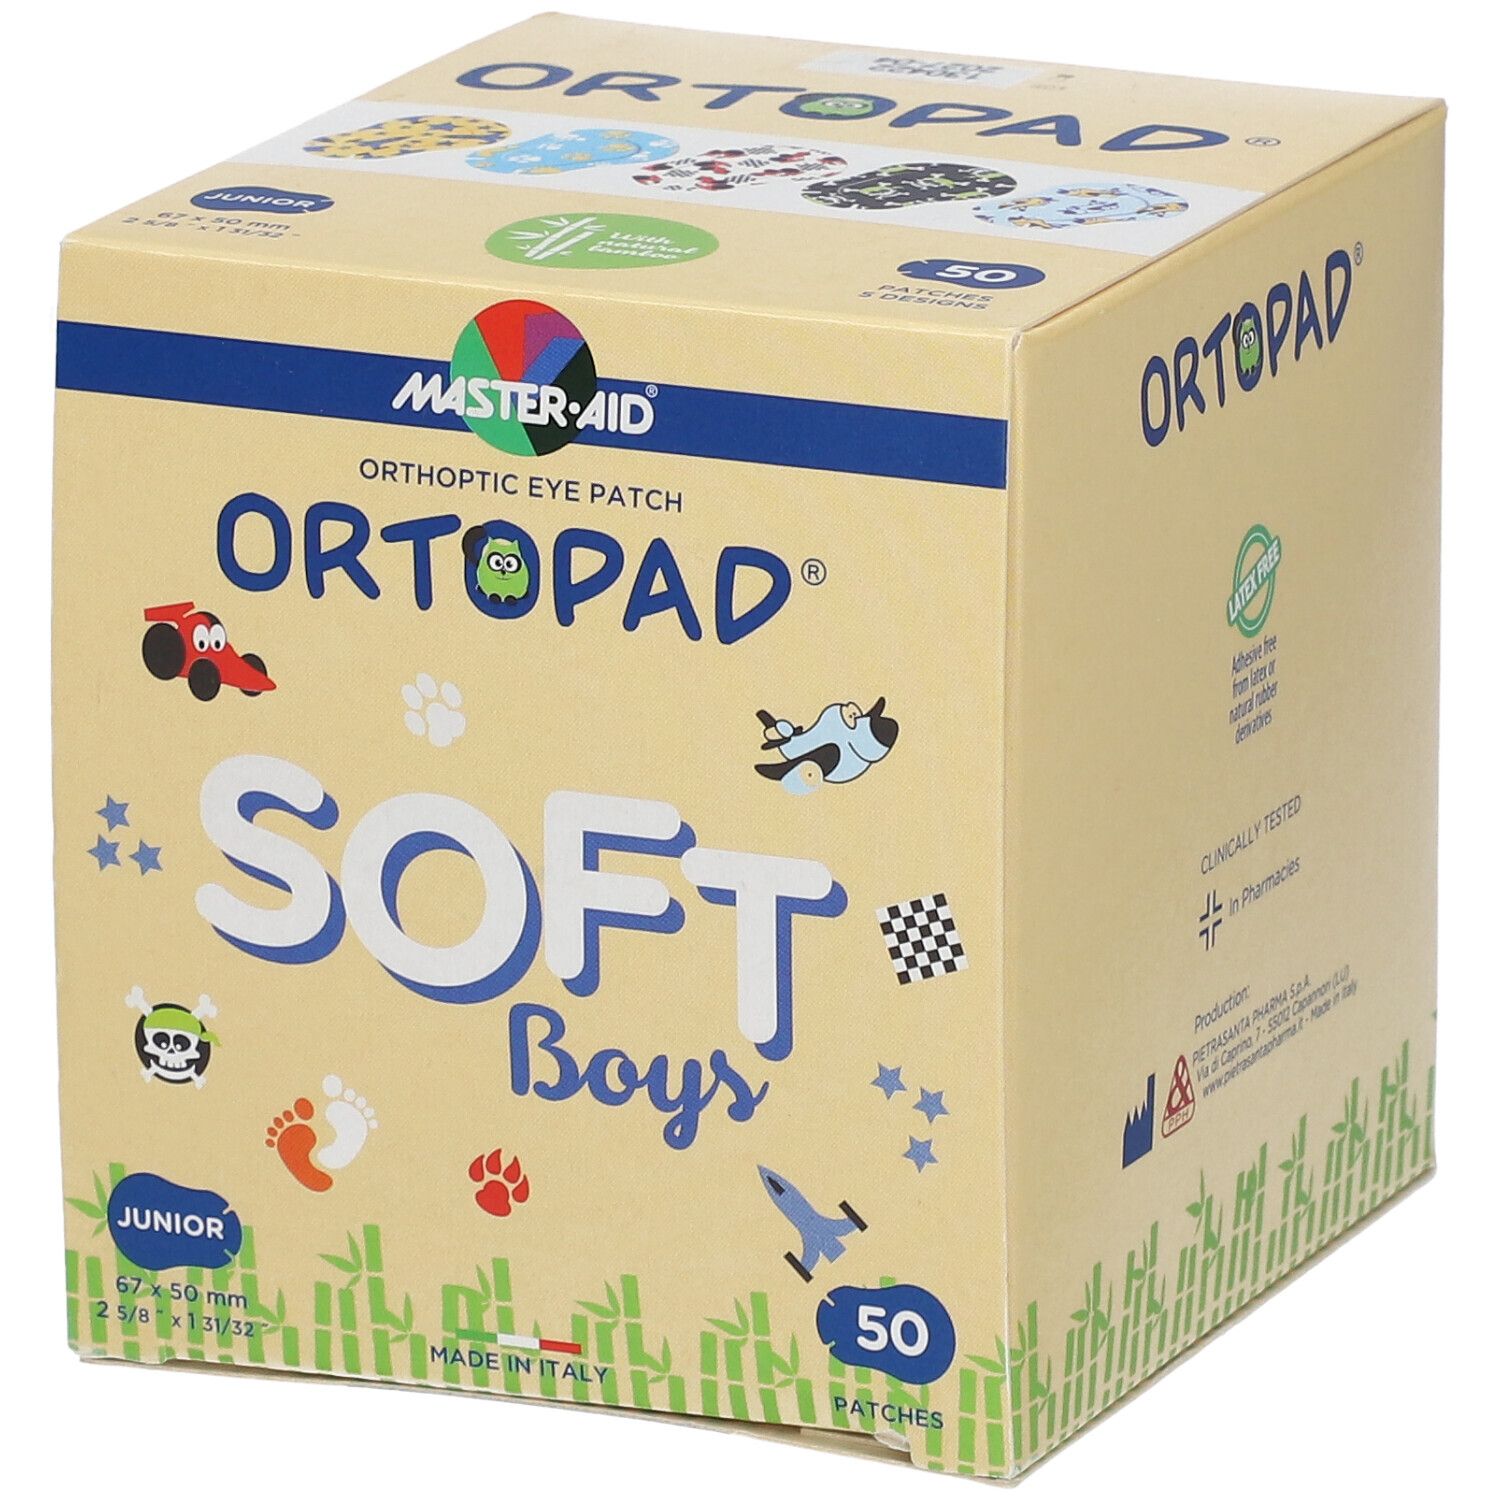 Ortopad® Soft Boys Junior autres67 x 50 mm